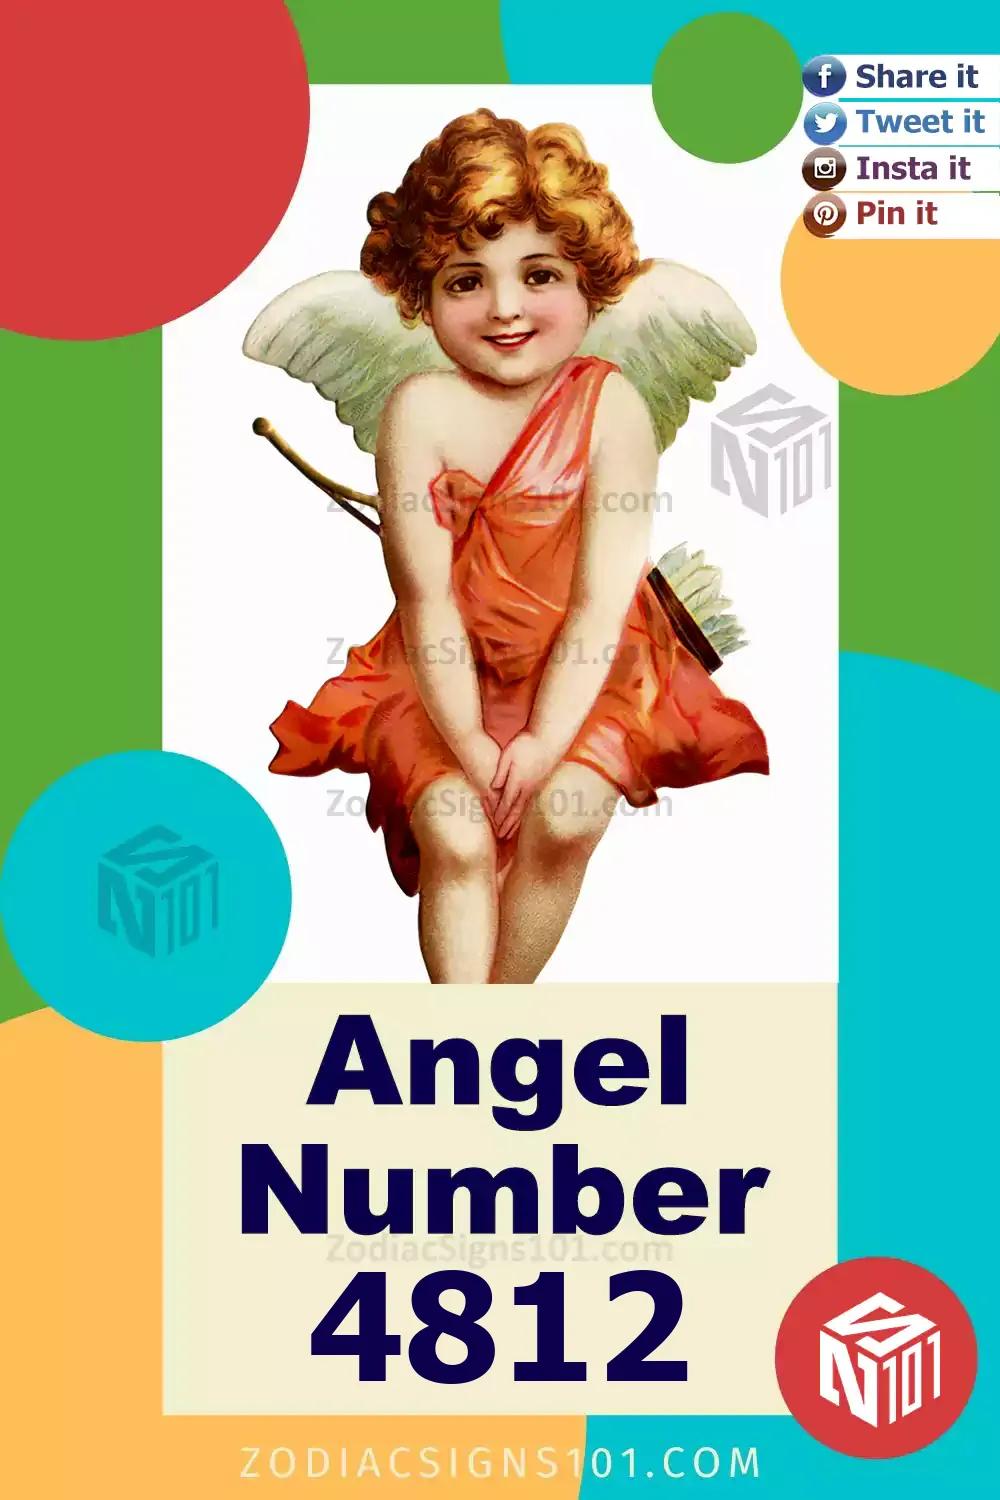 4812-Angel-Number-Meaning.jpg